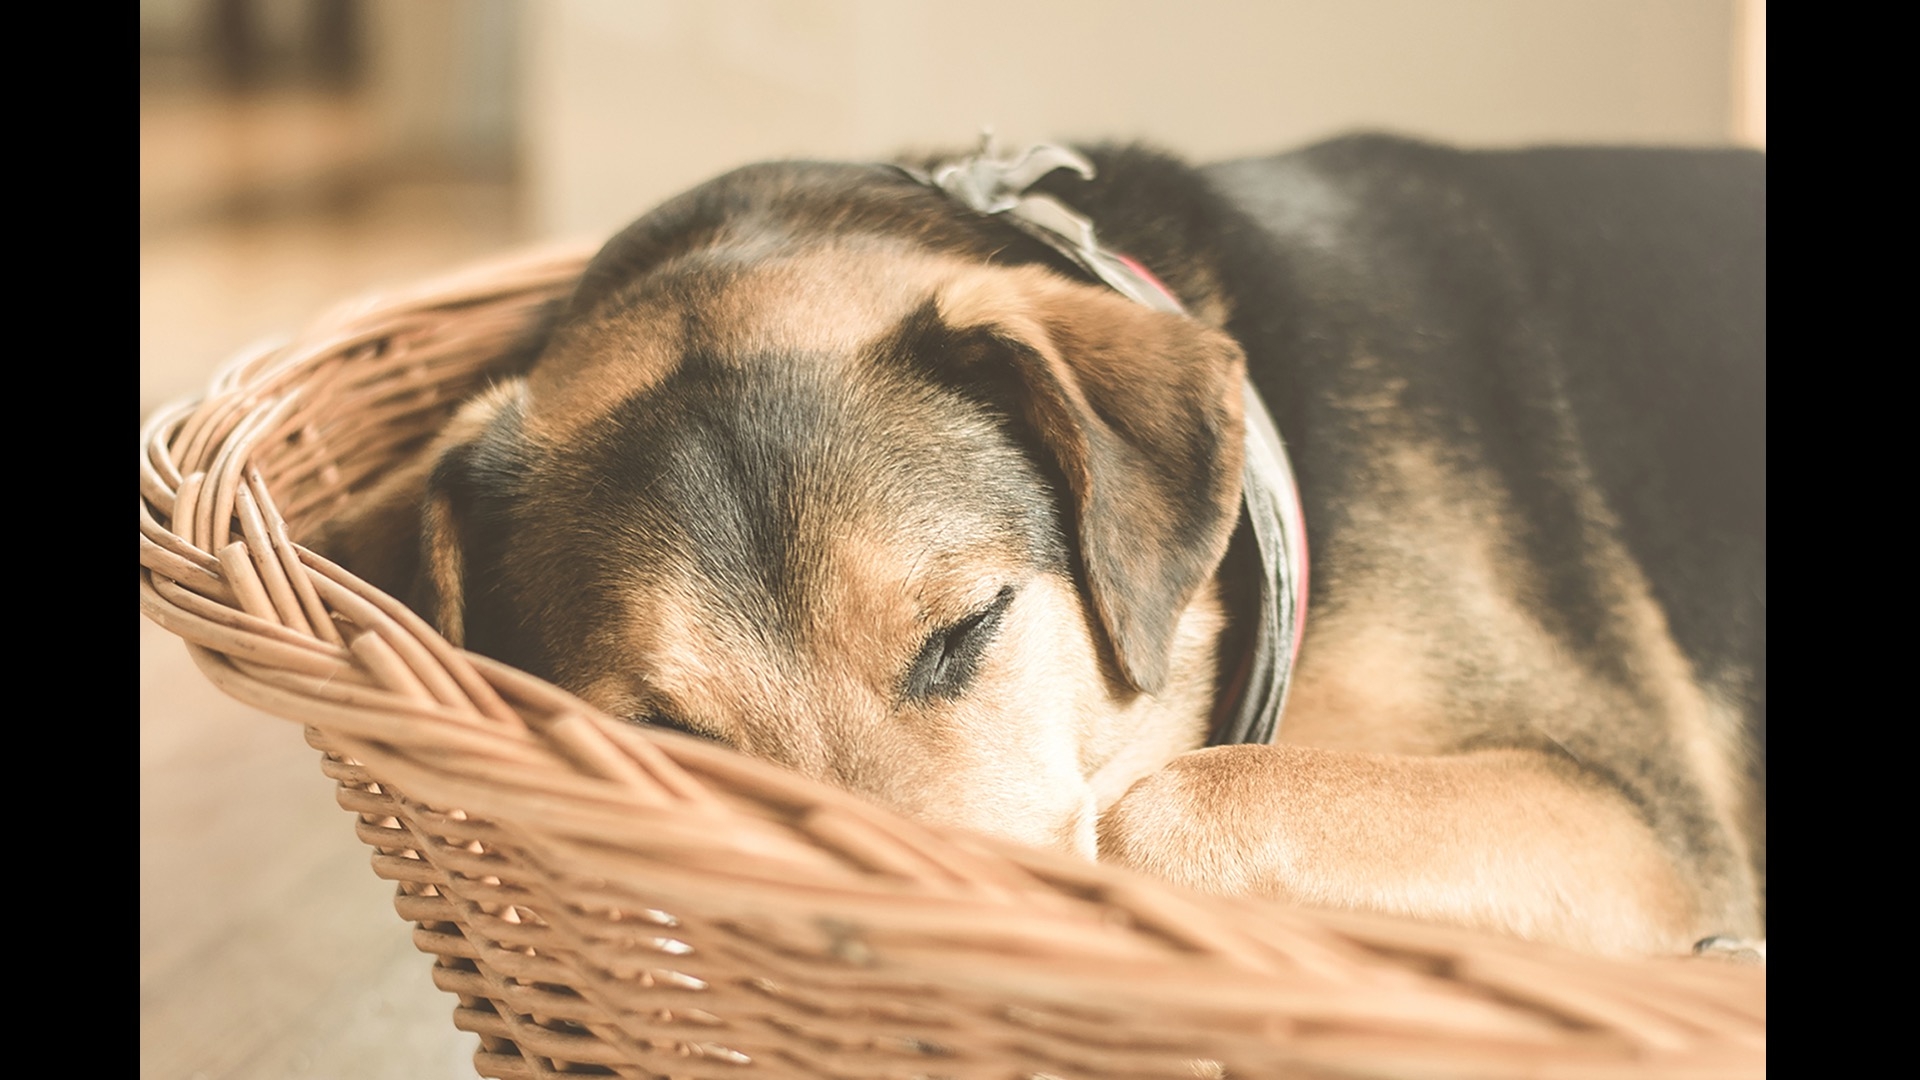 dog sleeping in basket